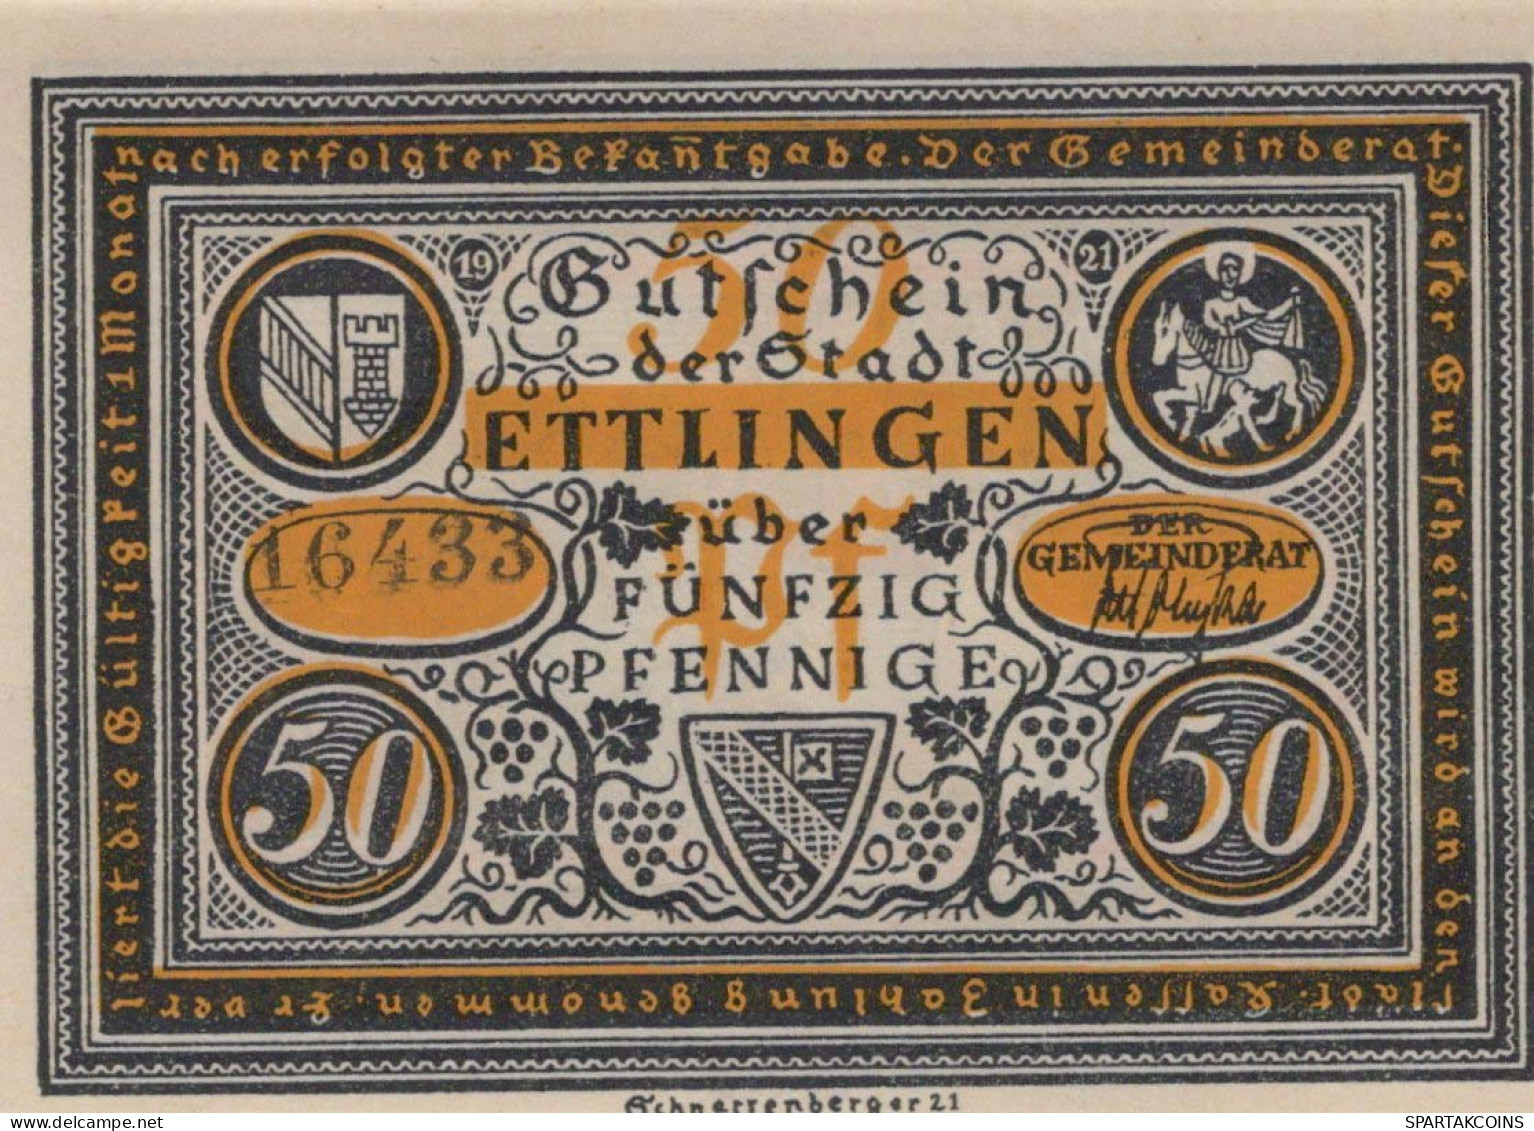 50 PFENNIG 1921 Stadt ETTLINGEN Baden UNC DEUTSCHLAND Notgeld Banknote #PB361 - [11] Local Banknote Issues